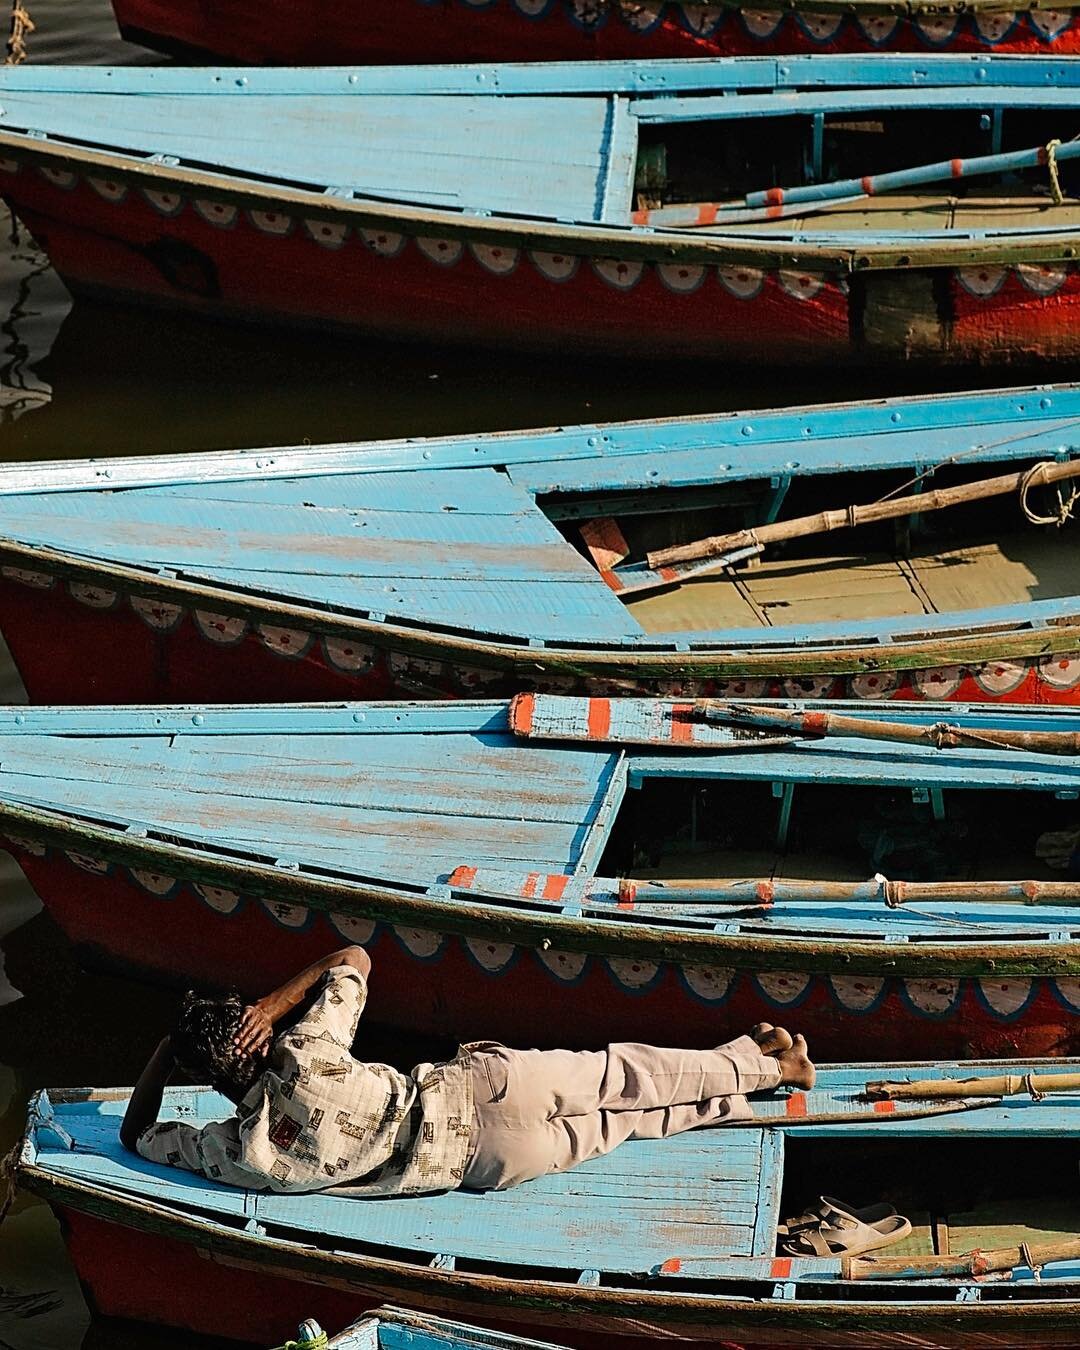 The symmetry of this moment on The Ganges just blew.me.away. 🙌🏻 #lifeinlight #indiatravelgram #india #style #color #nationaldestinations #instagram #_soi #storiesofindia #photooftheday #passionpassport #travel #travelgram #portrait #documentaryphot